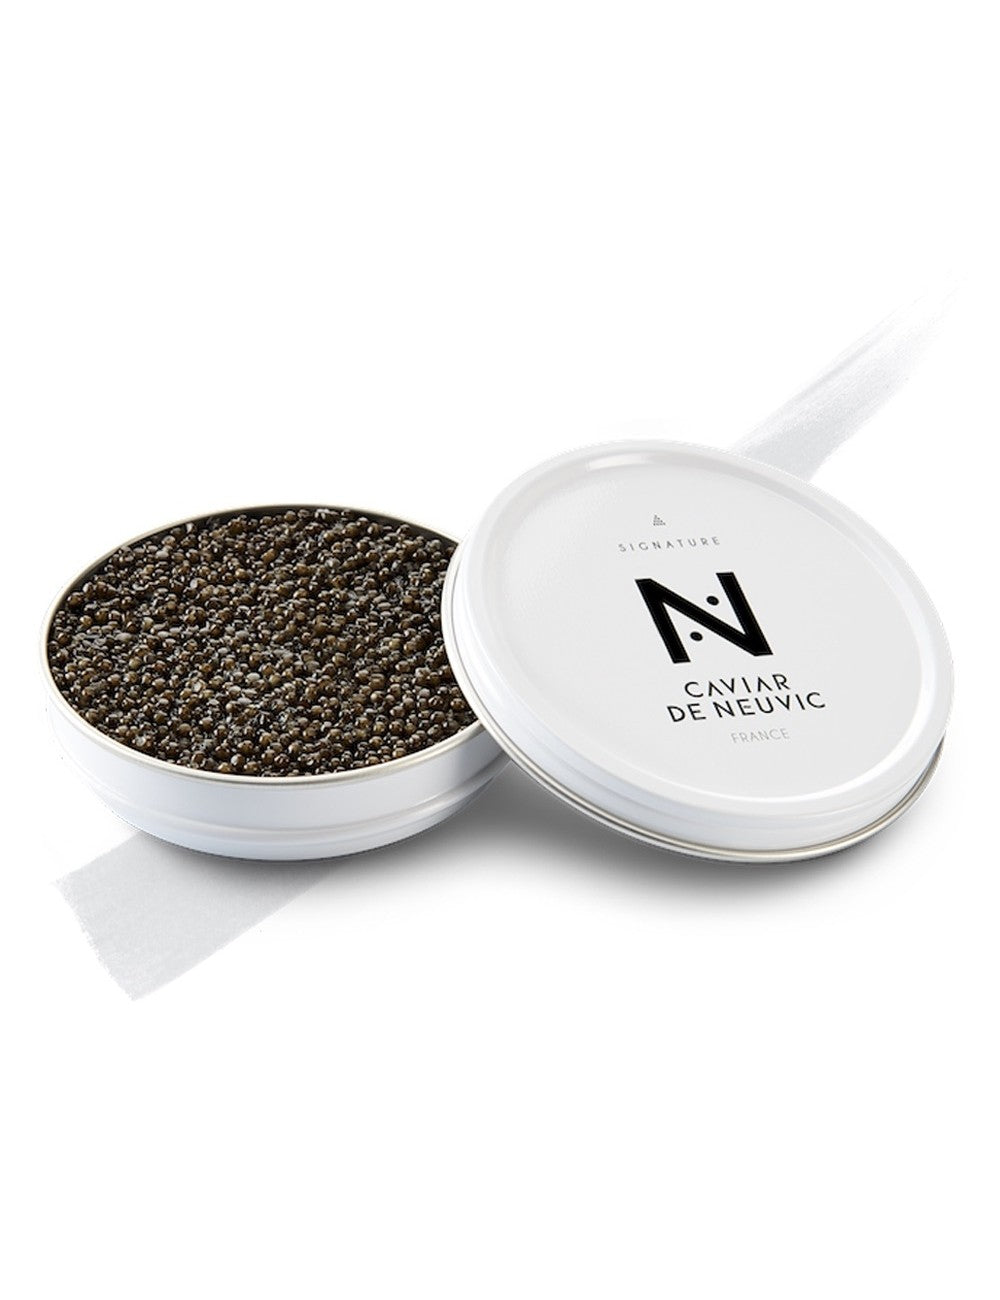 Neuvic Caviar Baeri Signature, 50 gr